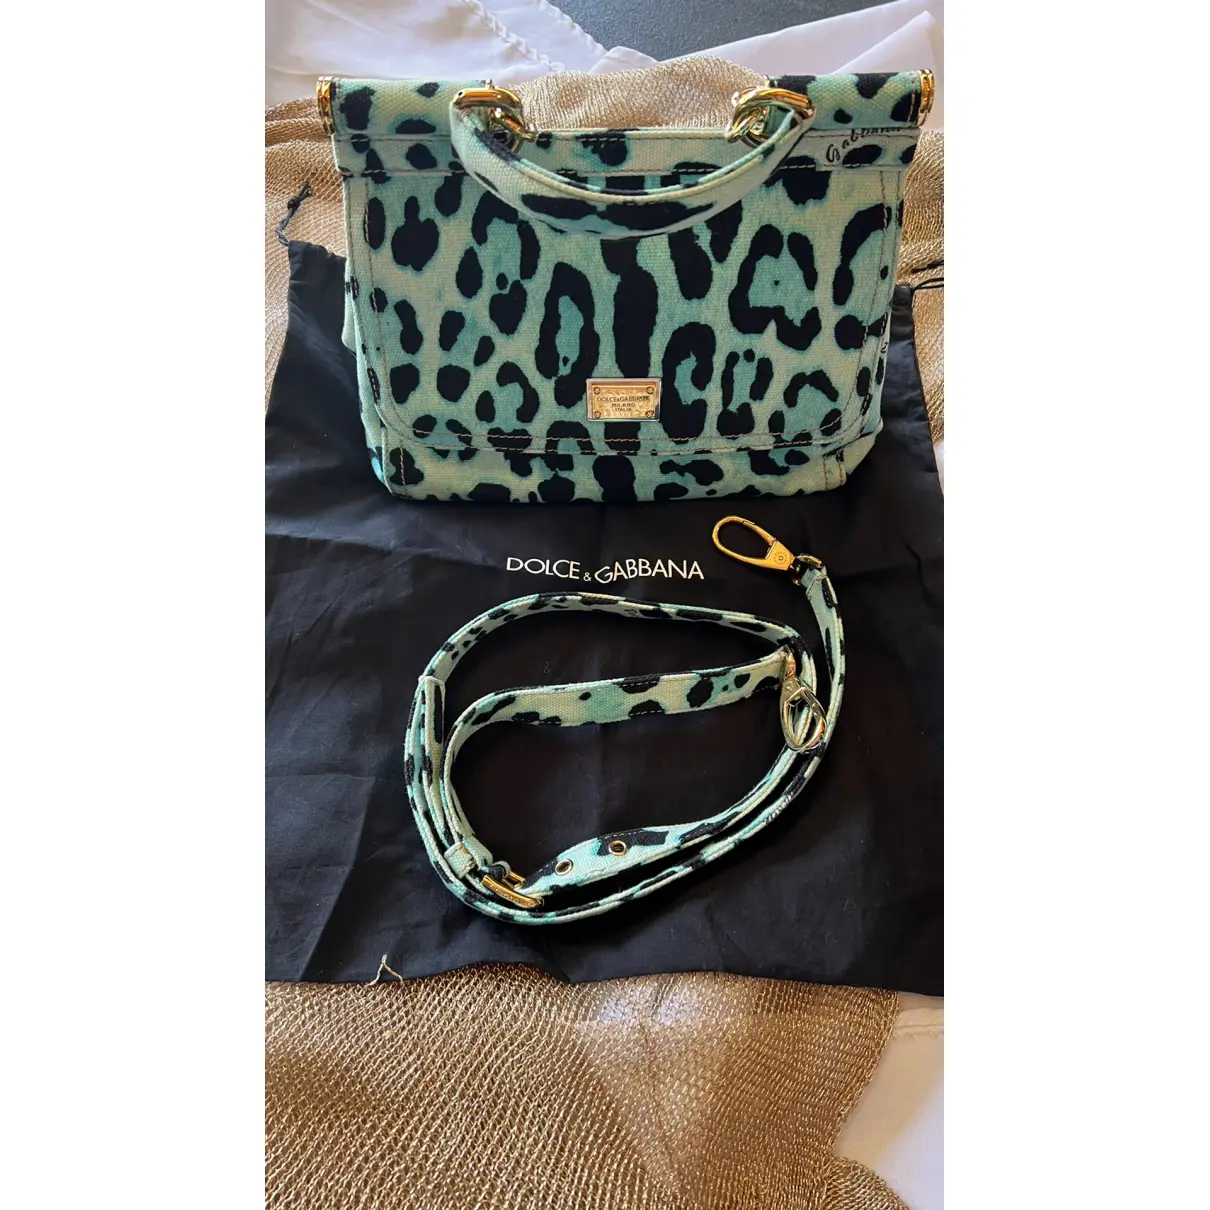 Buy Dolce & Gabbana Sicily cloth crossbody bag online